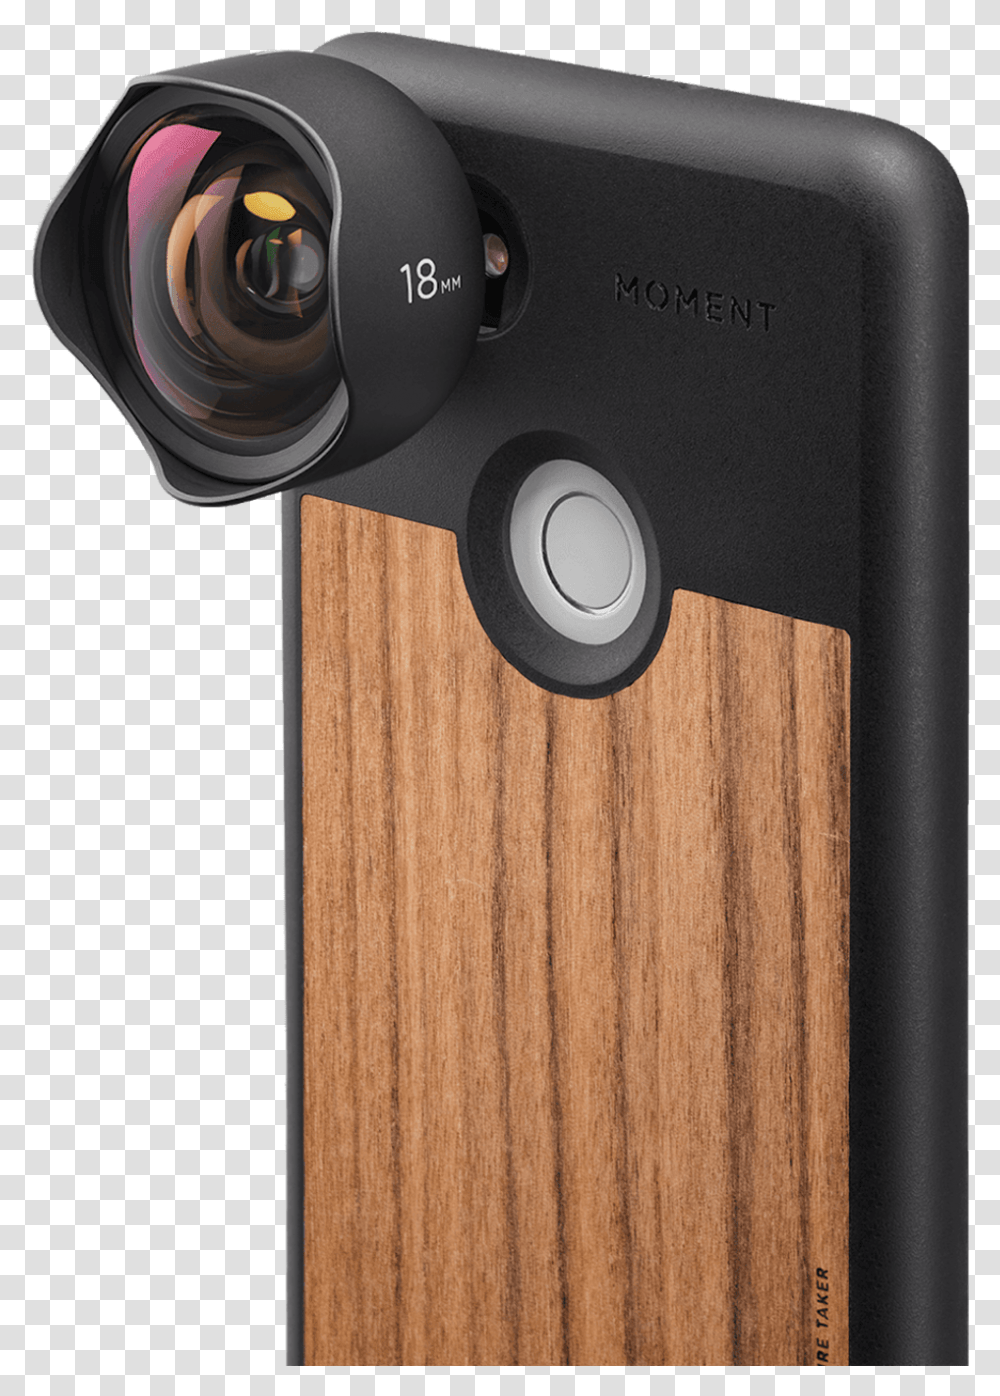 Smartphone Camera With A Moment Lens Mobile Phone, Electronics, Wood, Hardwood, Camera Lens Transparent Png